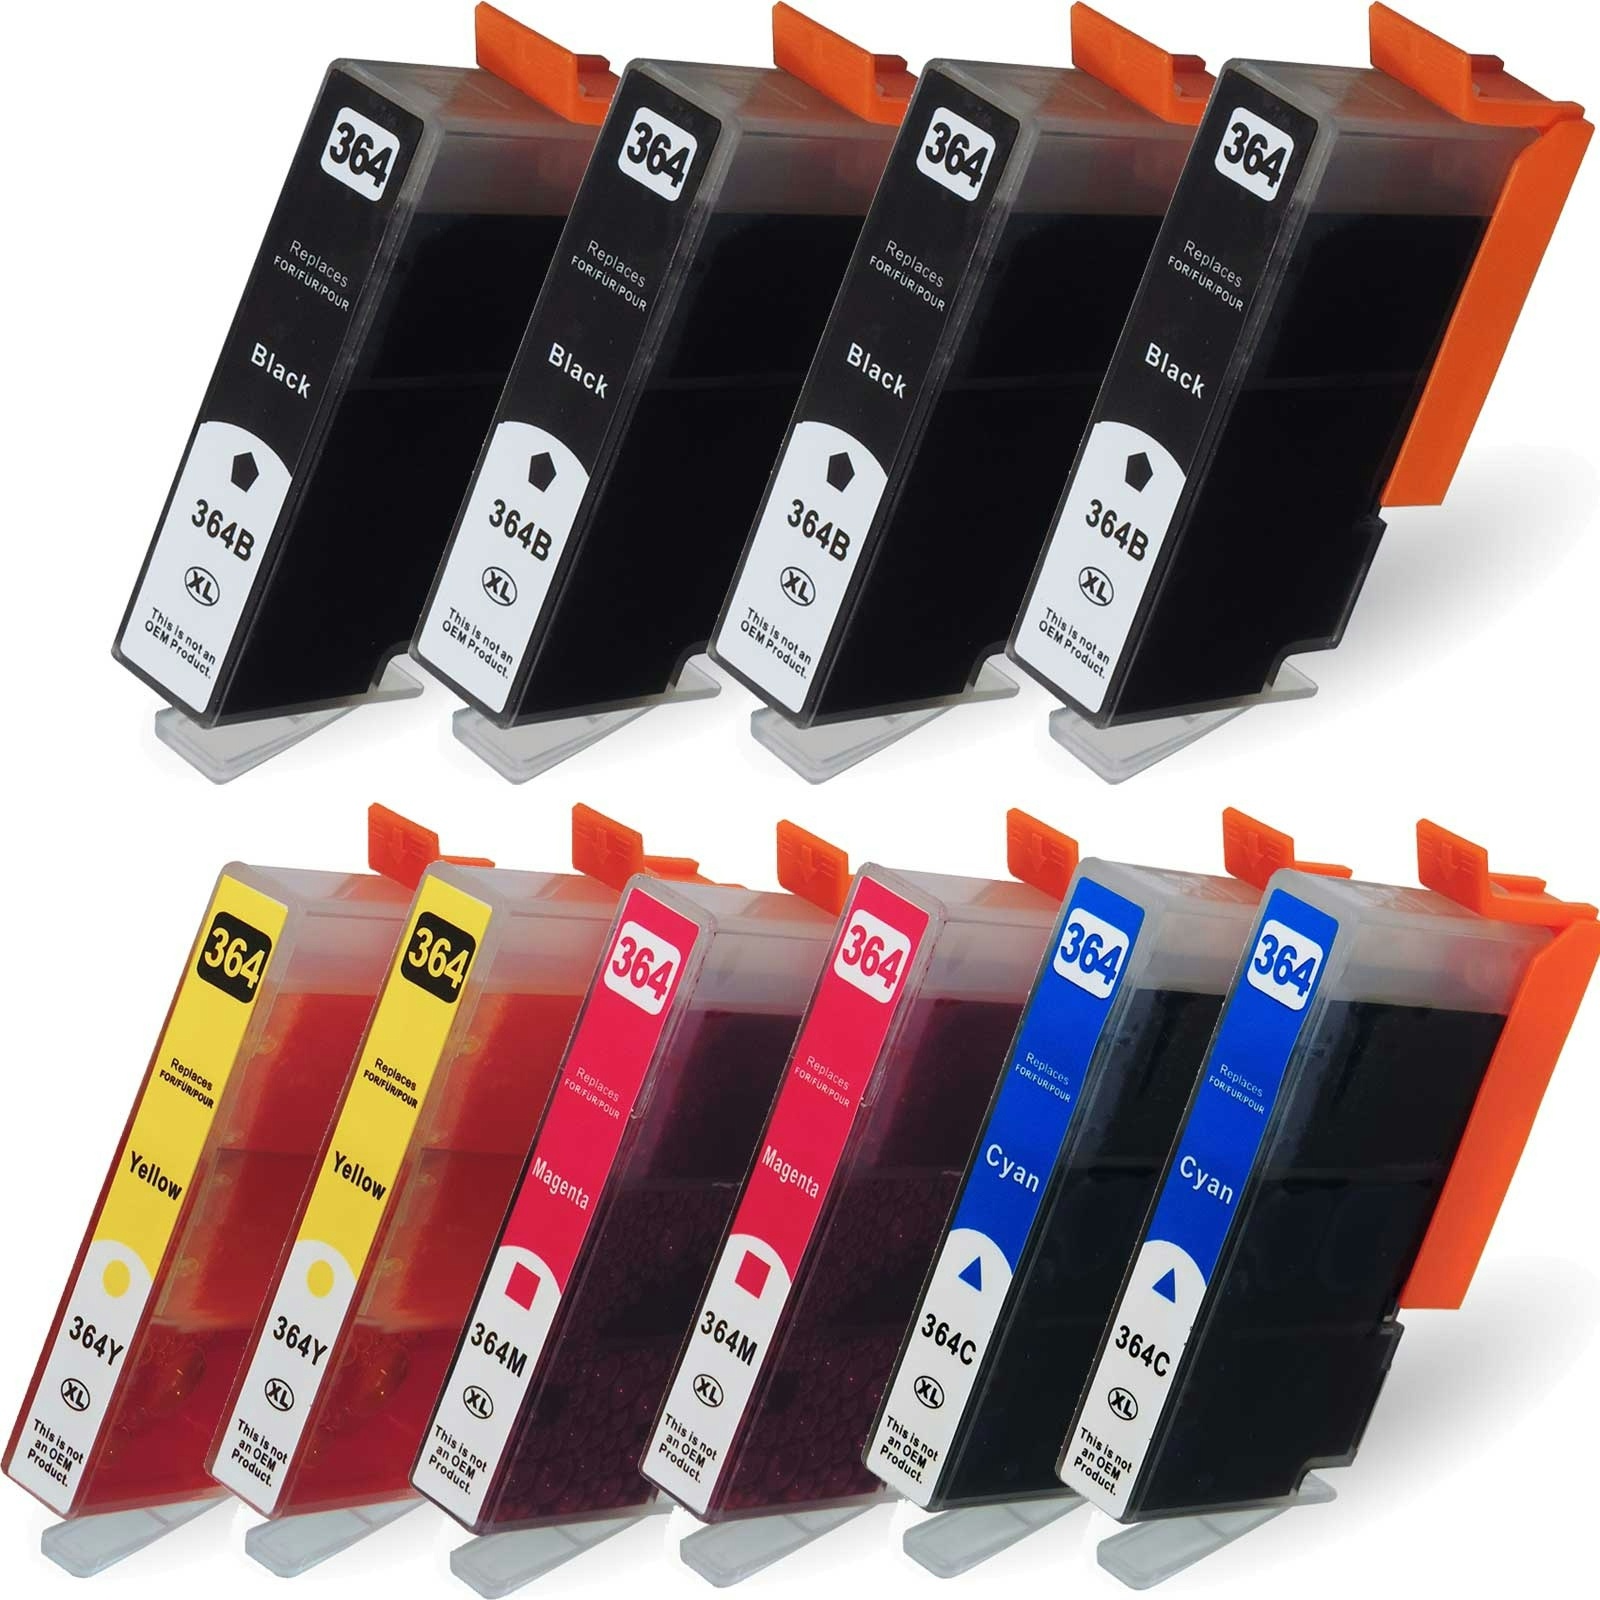 10er Set D&C Tinte für HP PhotoSmart 5520 e All-in-One Druckerpatronen kompatibel HP PhotoSmart 5520 e All-in-One Drucker